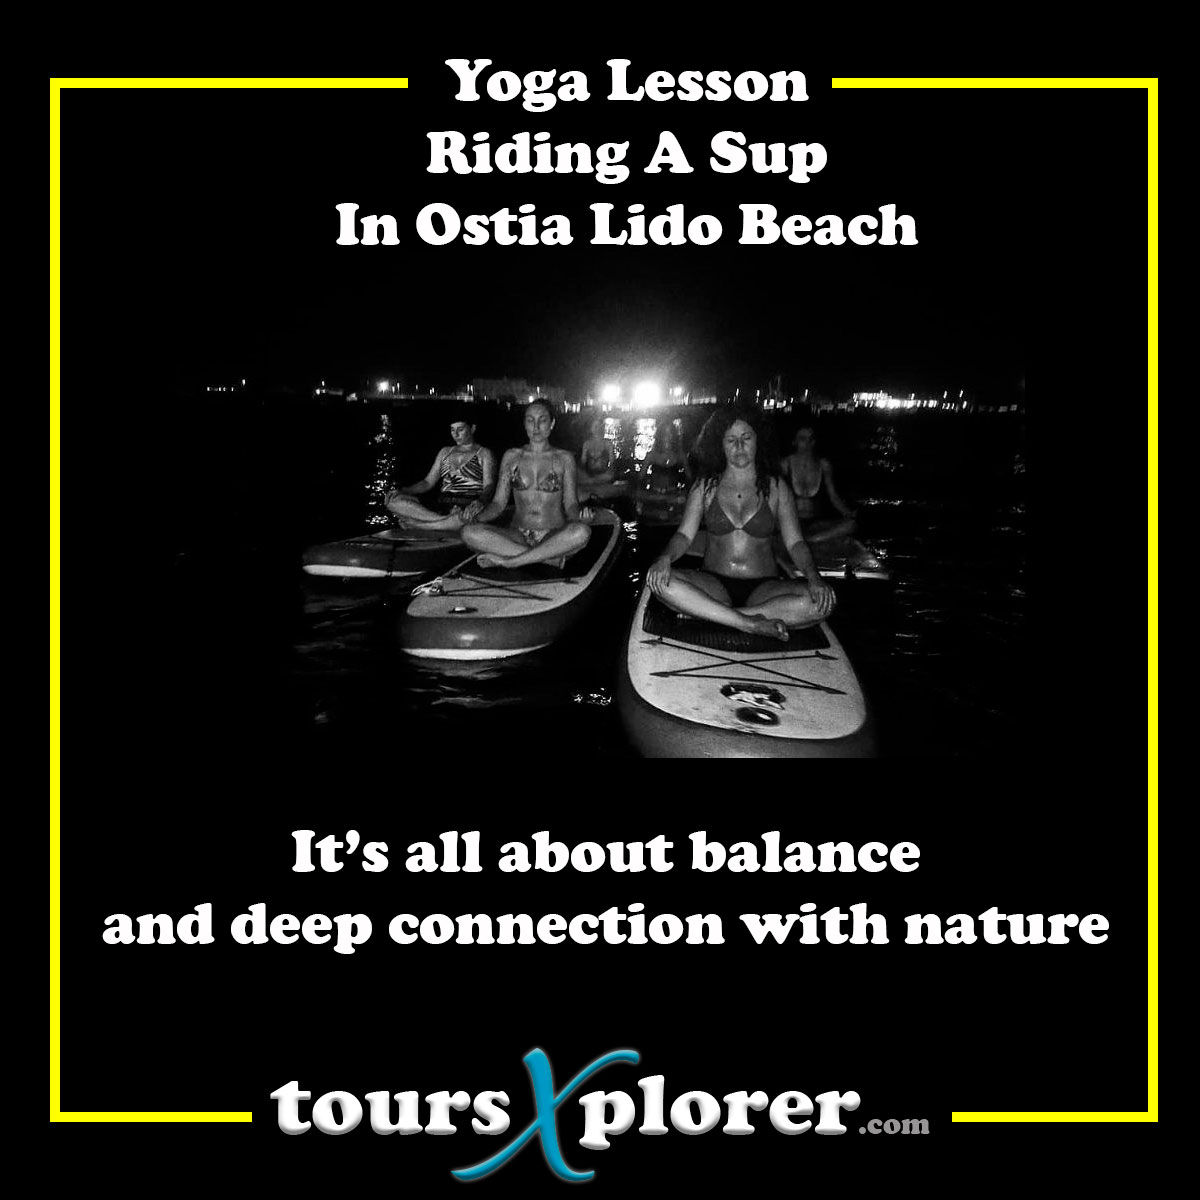 Yoga Lesson

#yoga #SUP #standuppaddle #beach #ostialido #italy #travel #wellness #fitness #mindfulness #meditation #outdooractivities #adventure #relaxation #selfcare #tourism #yogaeverydamnday #yogalife #yogainspiration #vacation #Toursxplorer

toursxplorer.com/tour/yoga-less…